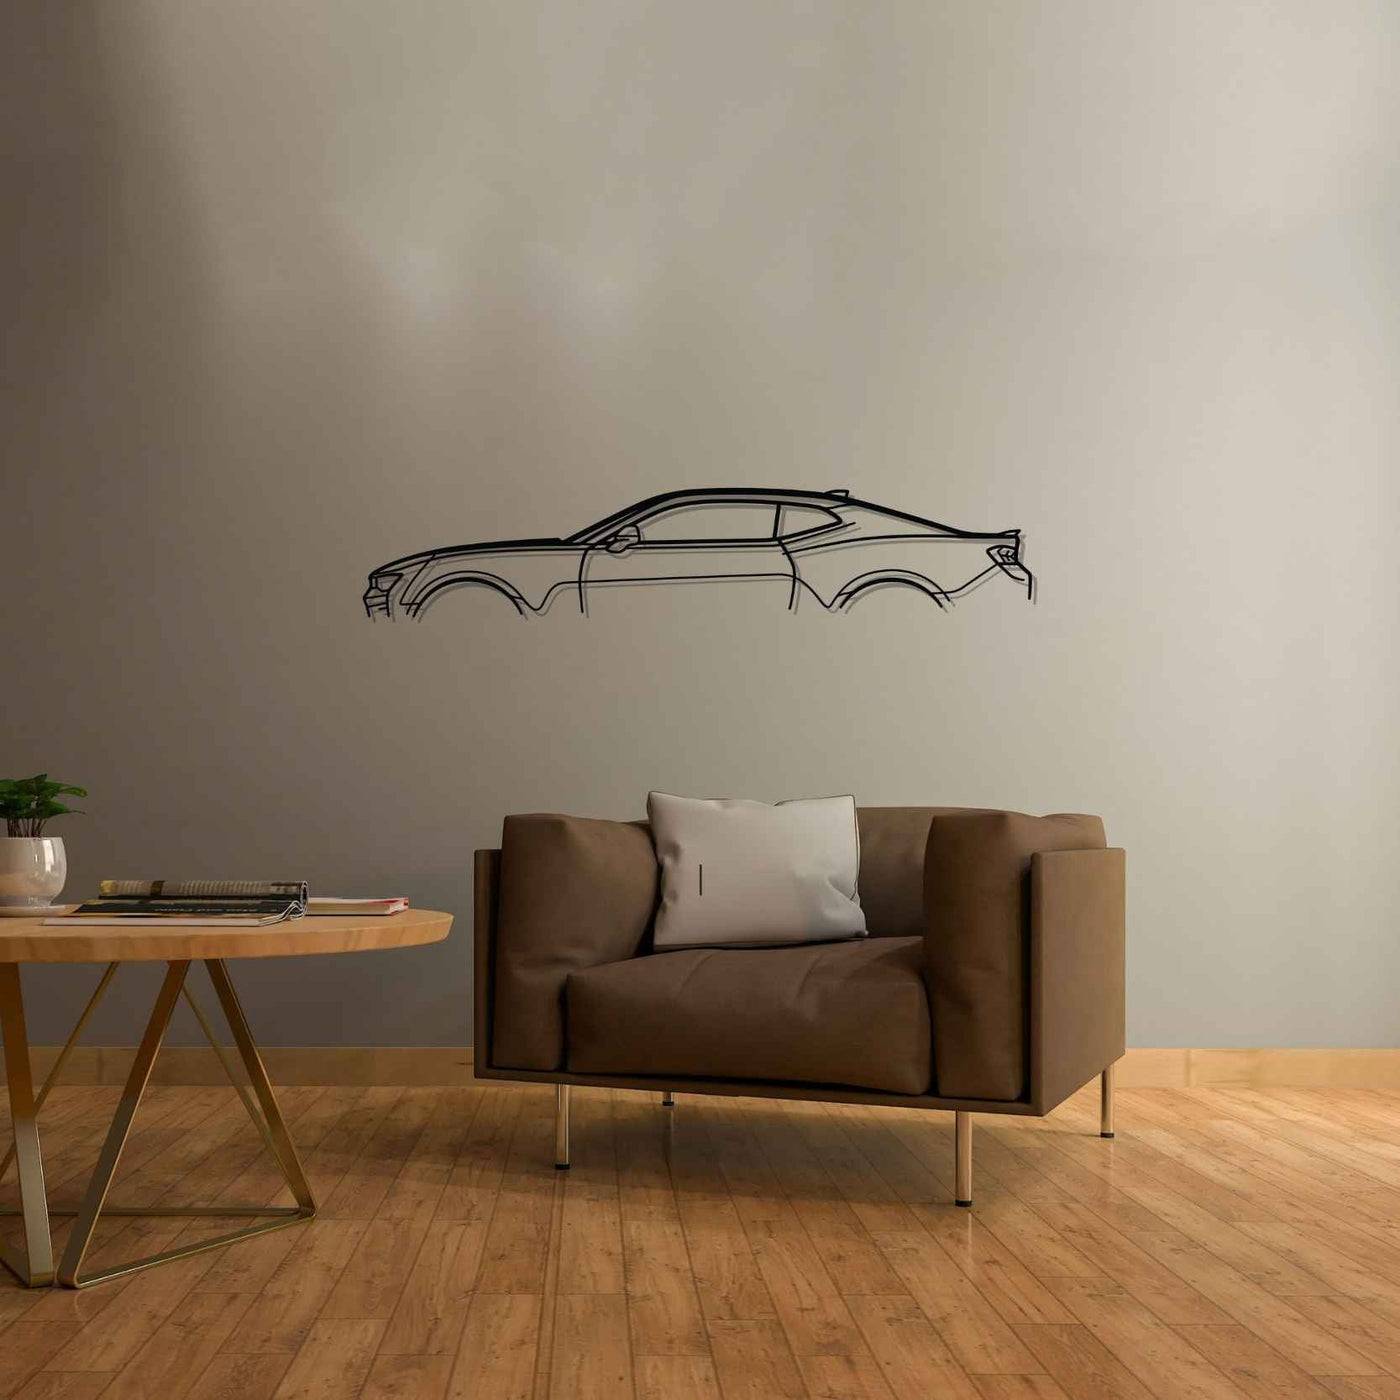 Camaro 2016 Metal Silhouette Wall Art